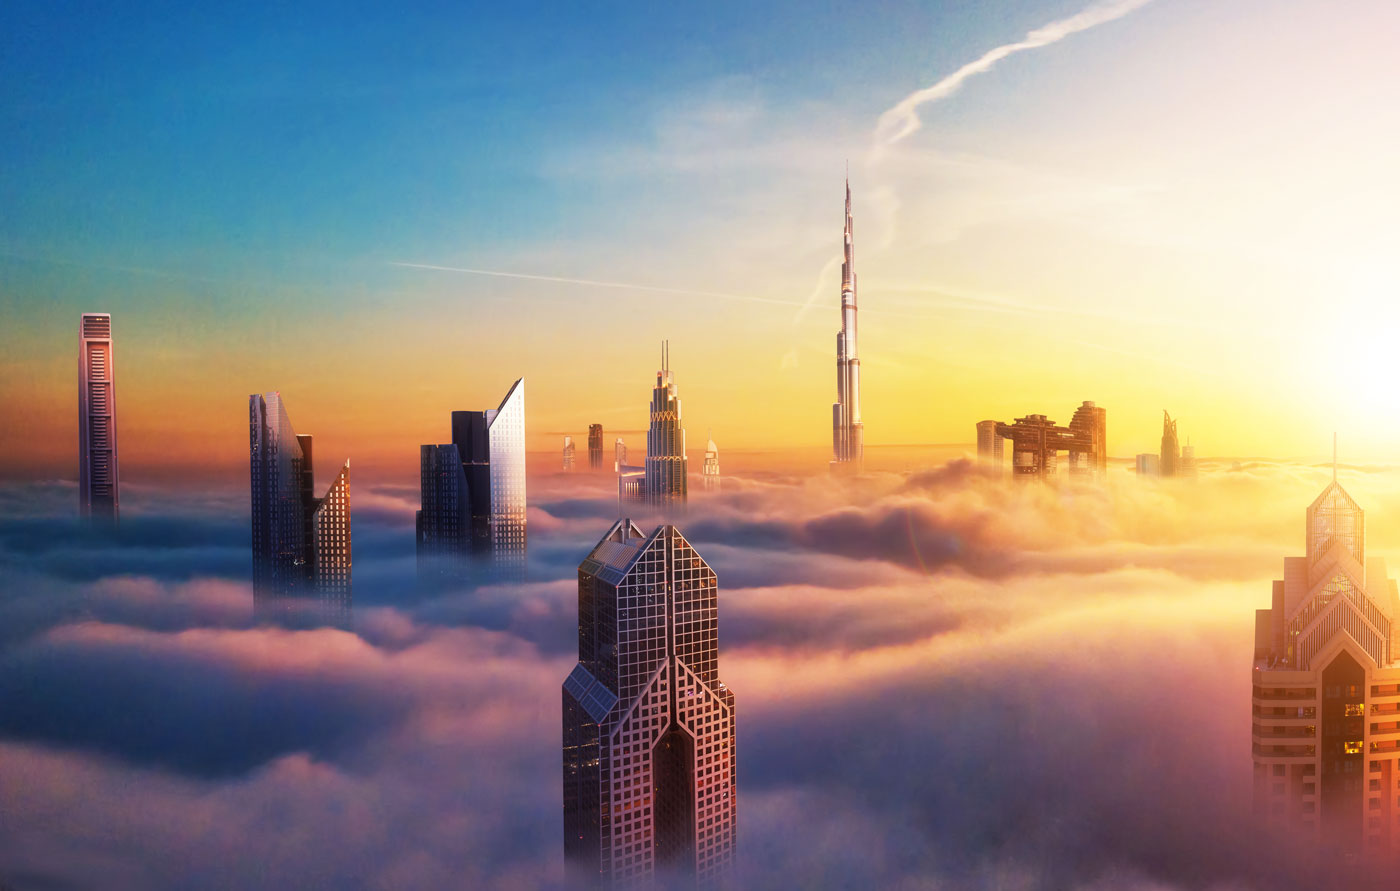 Vista del atardecer de Dubai con nubes